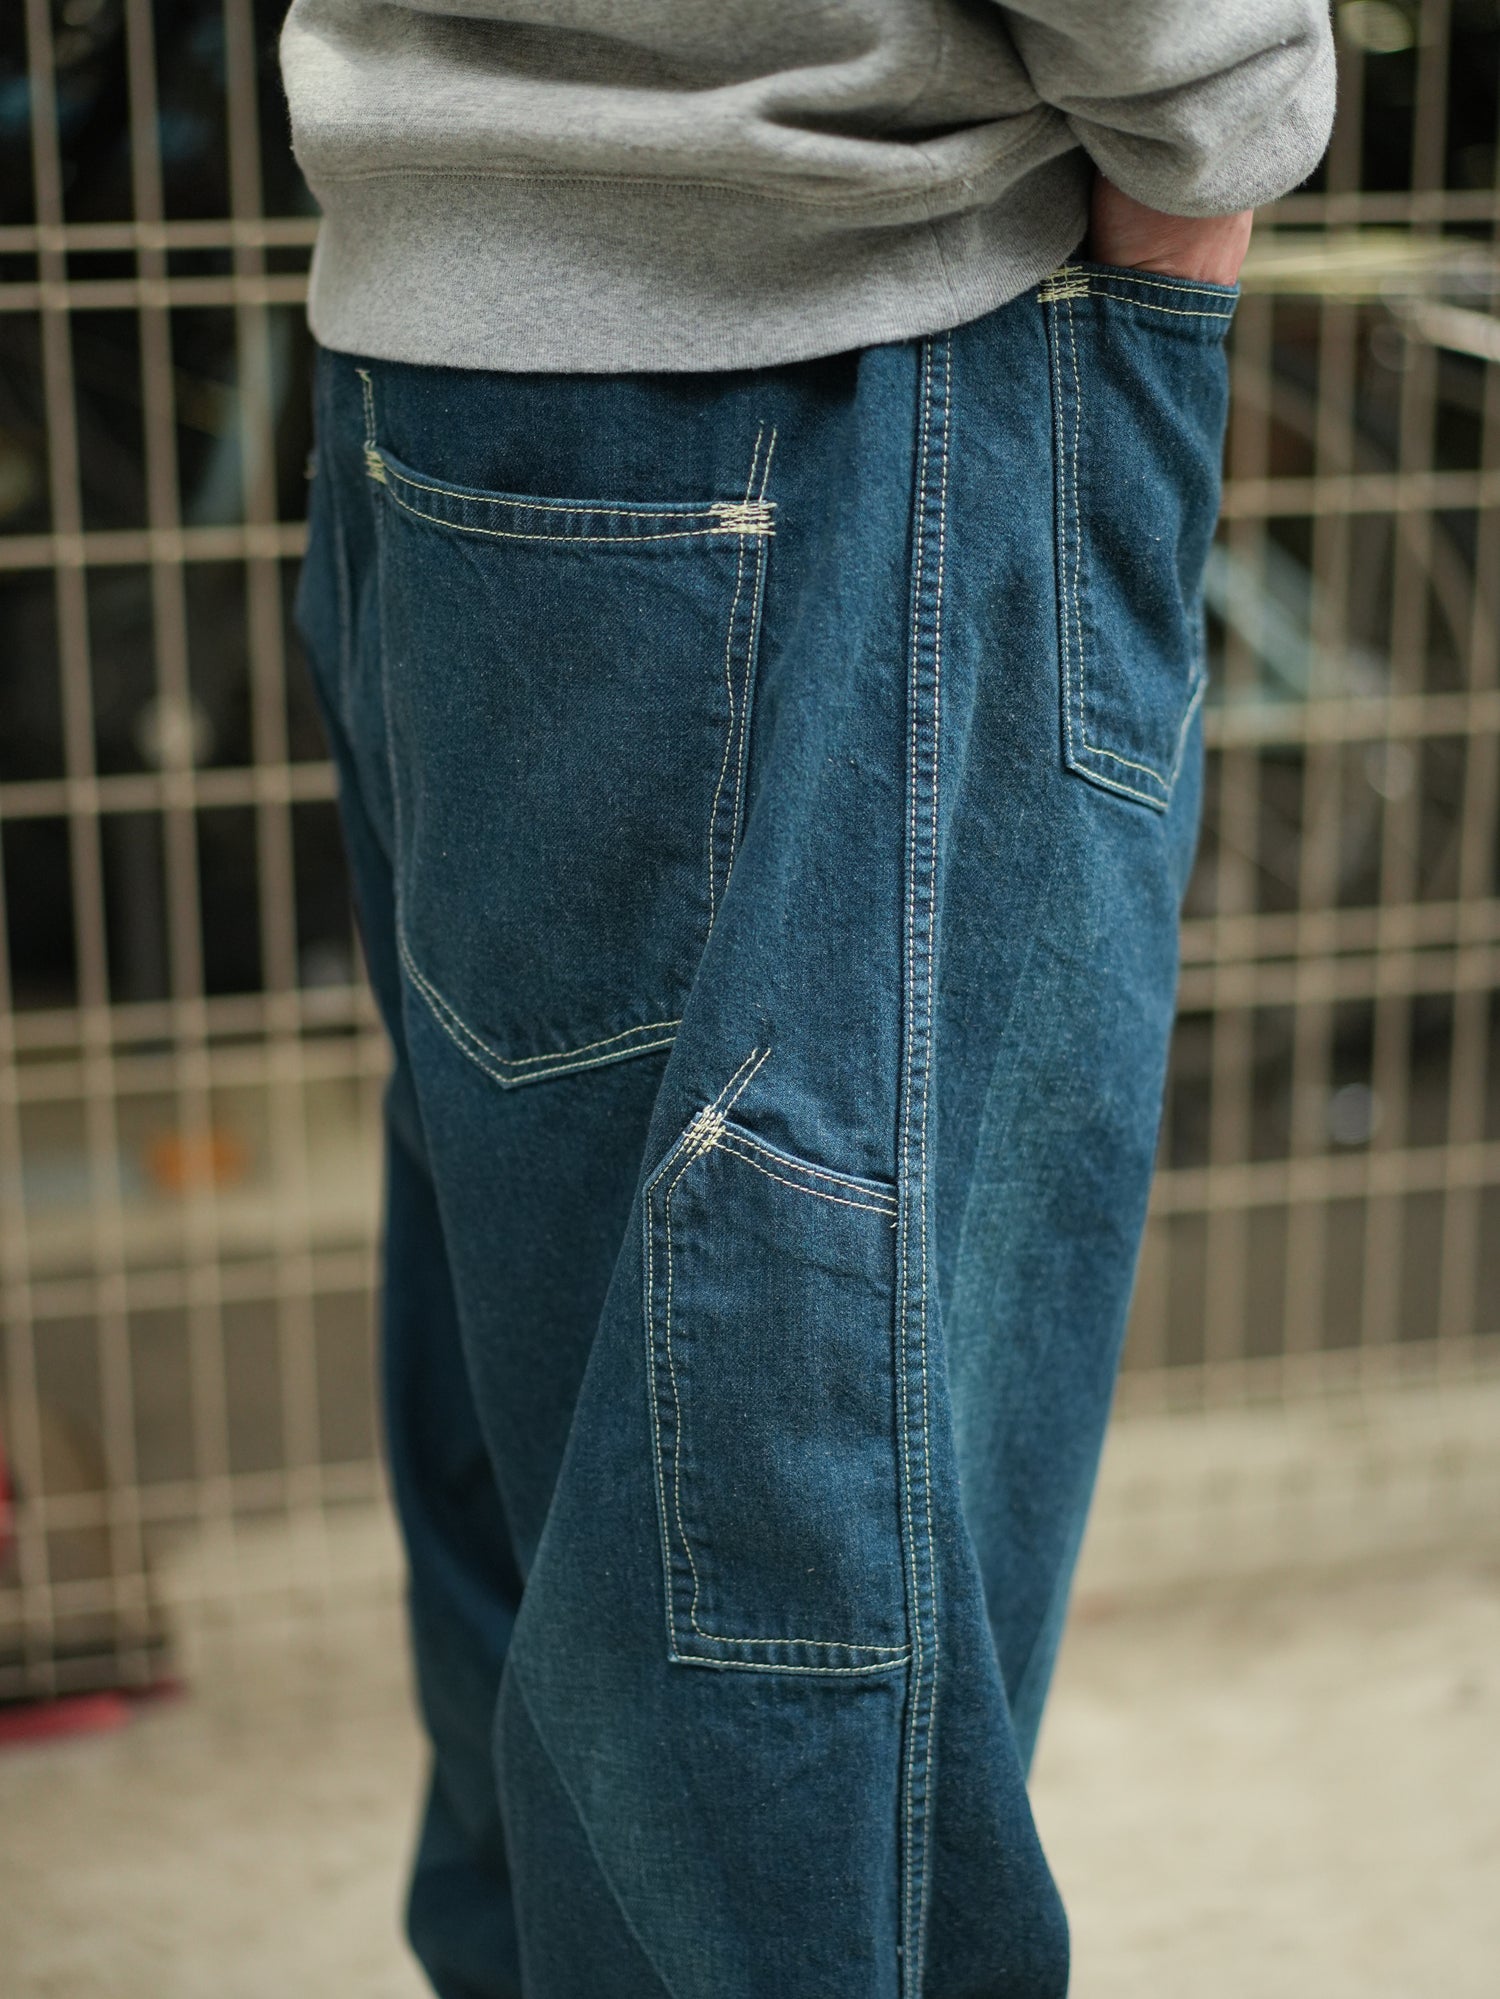 【DAN】Replica Jeans - Strapped12オンス岡山デニム